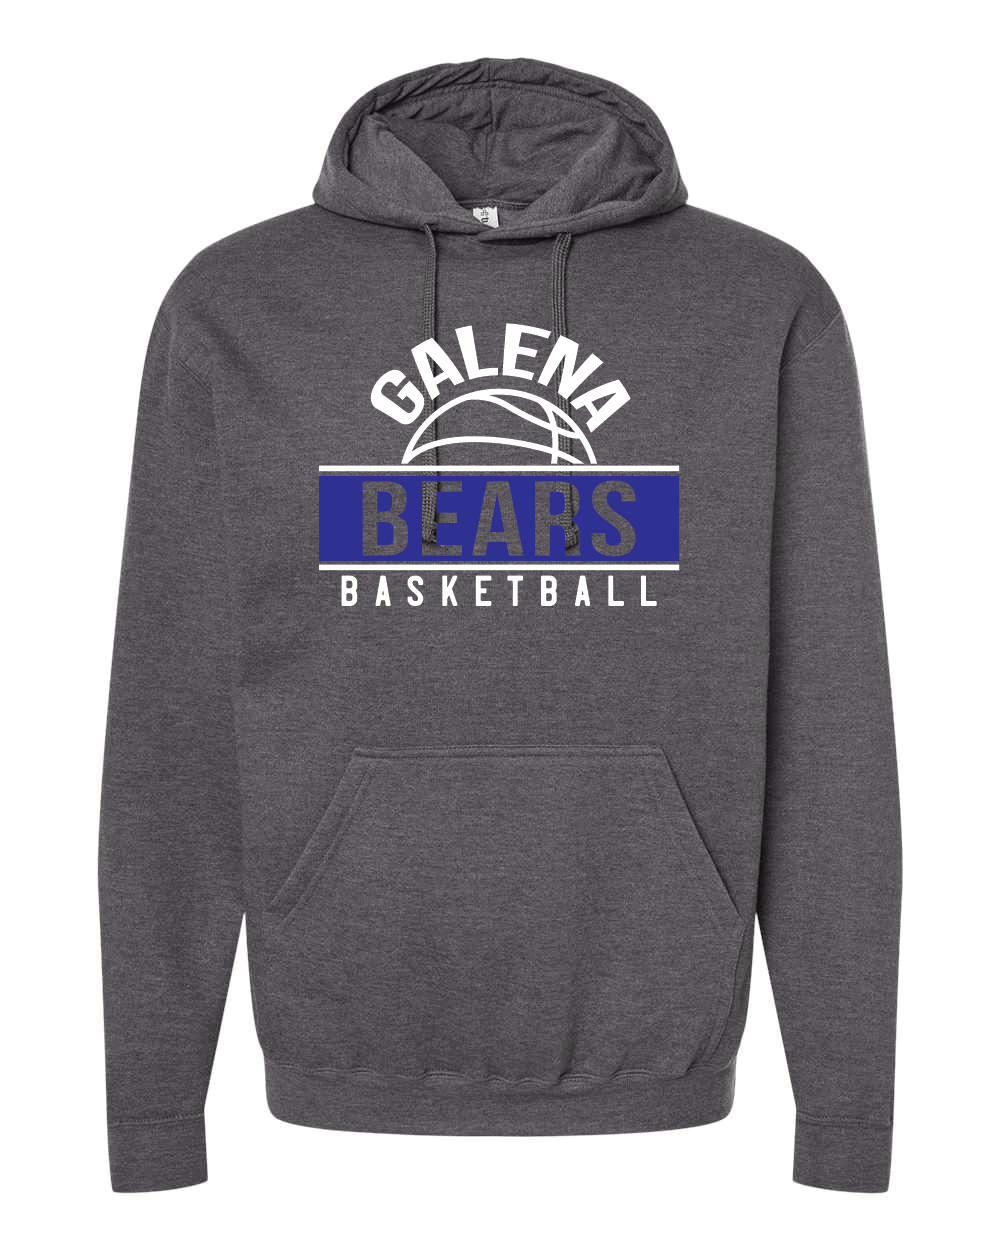 Galena Bears Basketball Hoodie